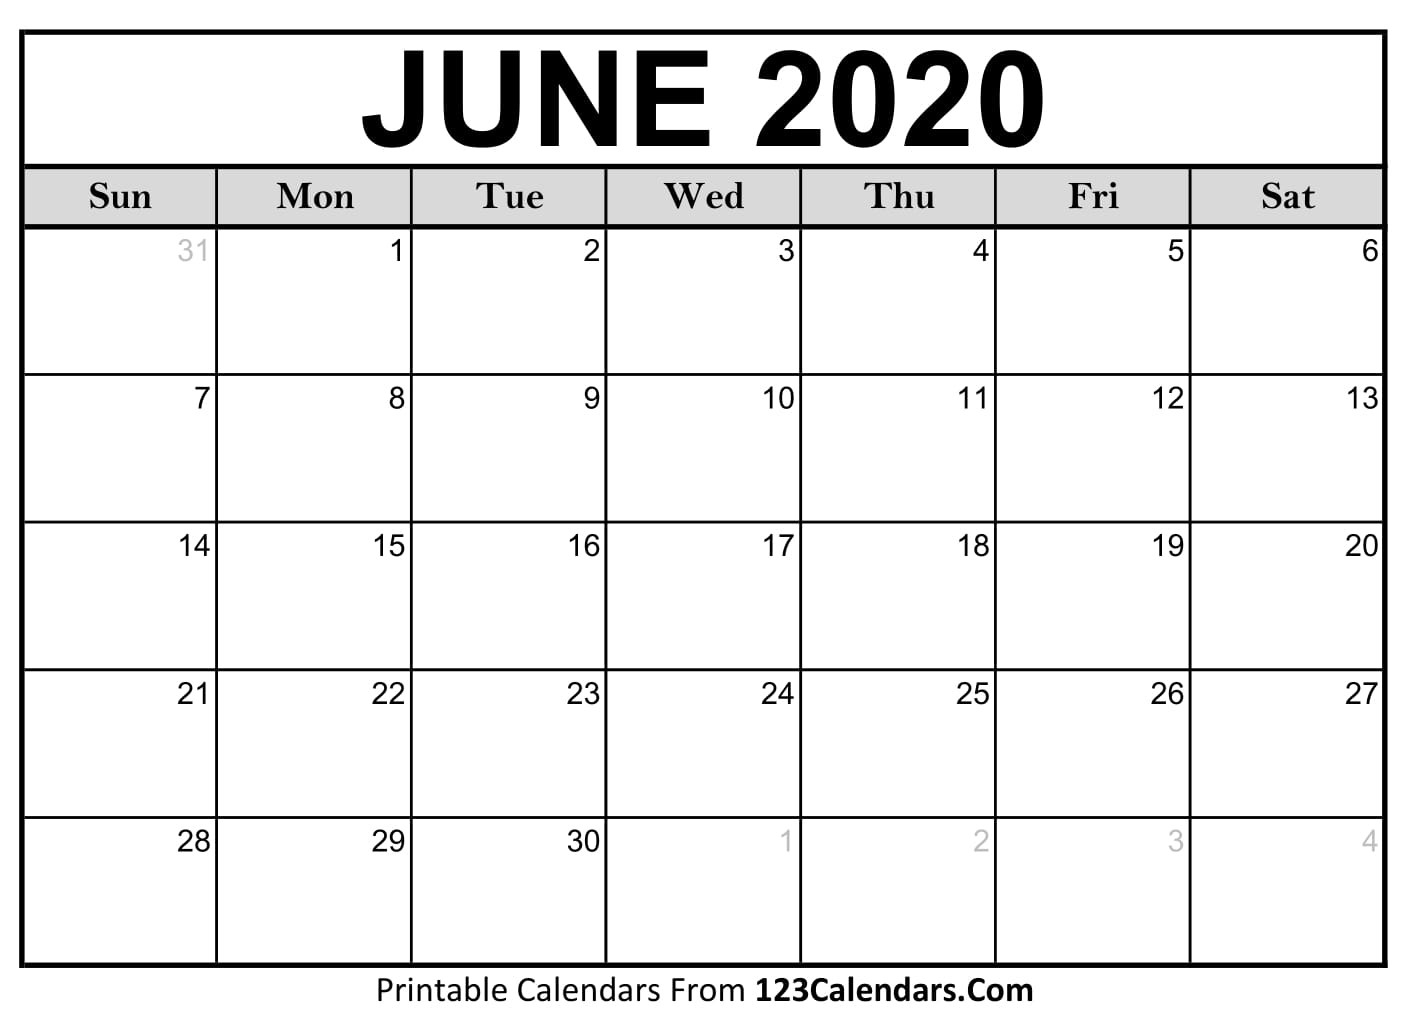 June 2020 Printable Calendar | 123Calendars-2020 Calendar Template With Catholic Holidays